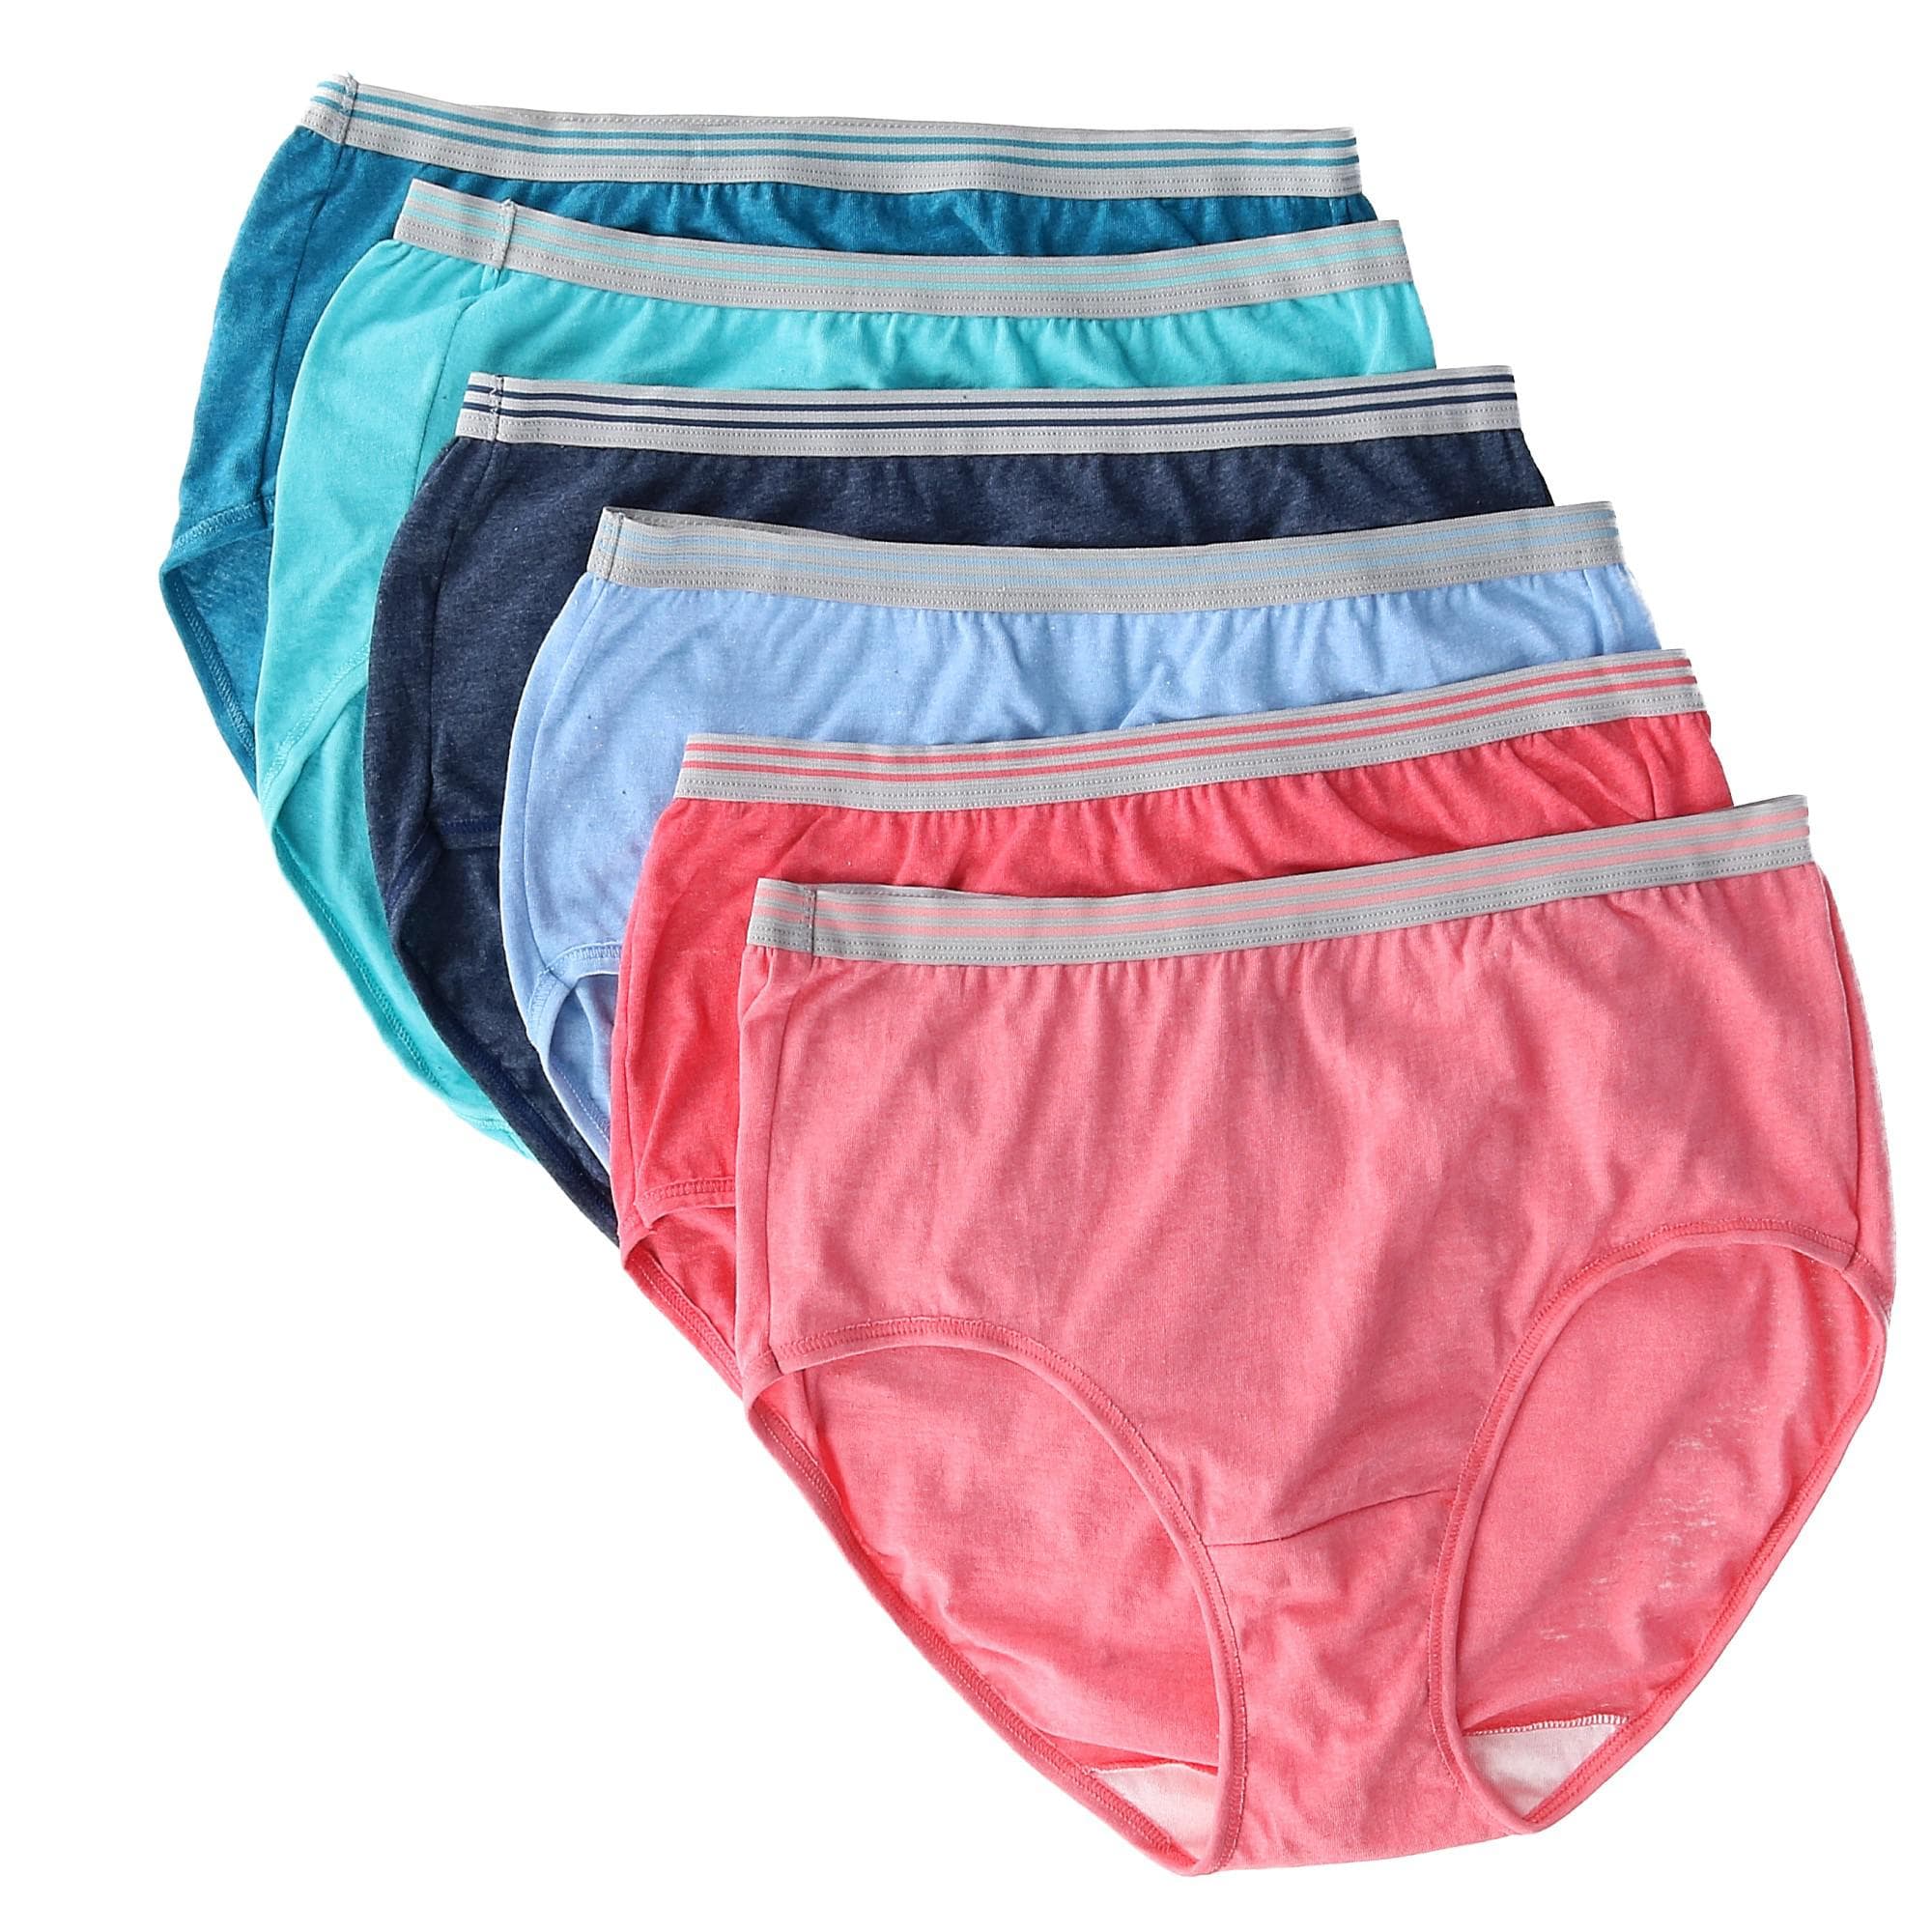 Women's Heather Brief Underwear (6 Pair Pack) by Fruit of the Loom